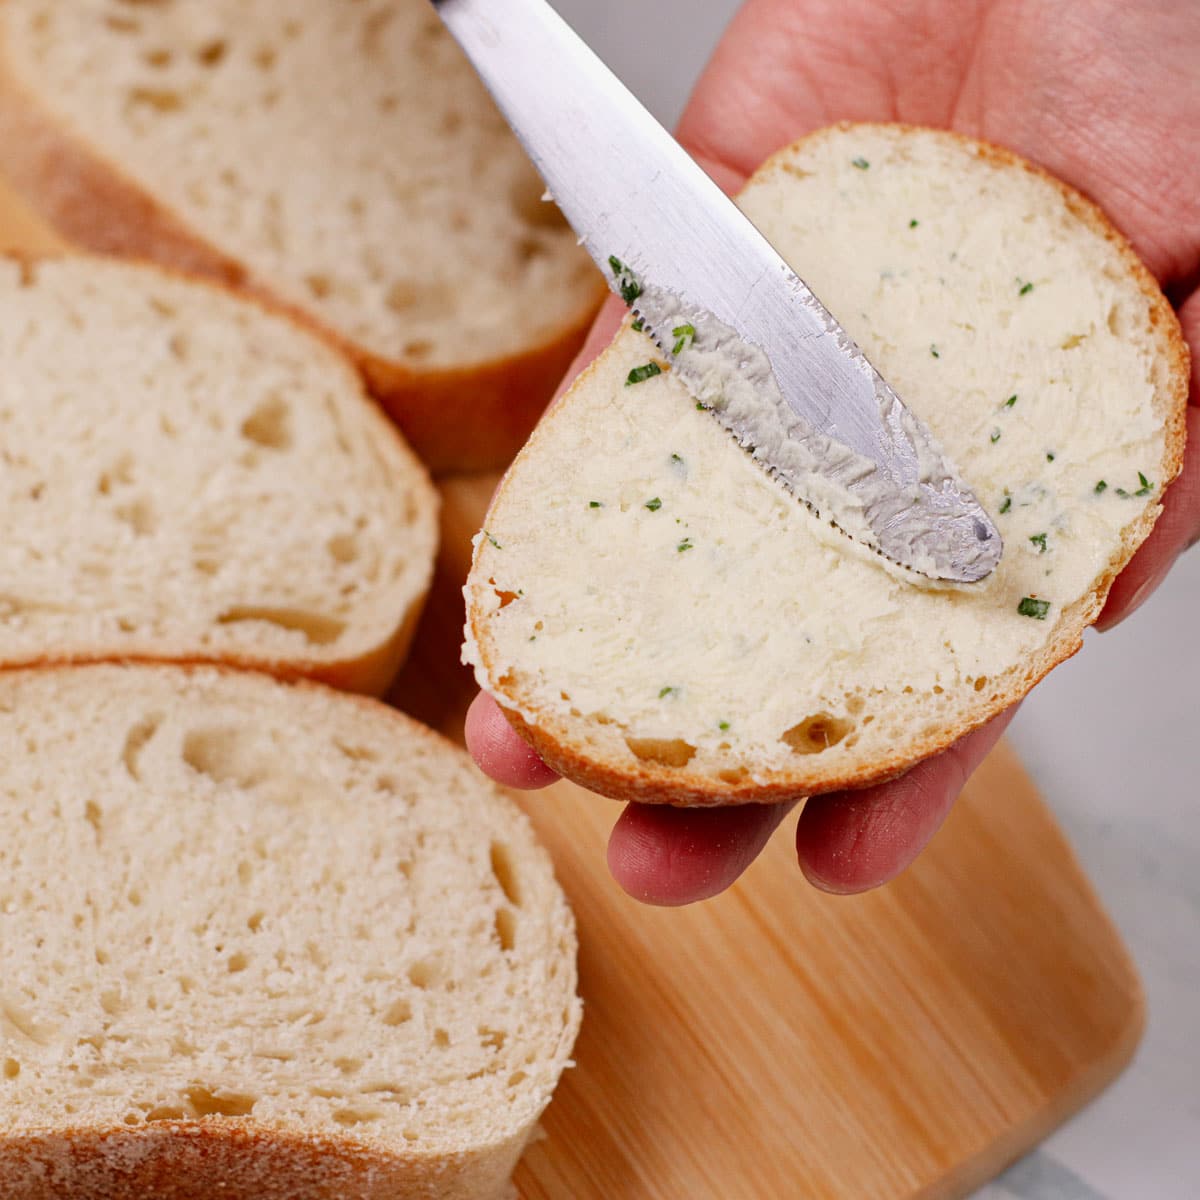 Spreading garlic butter on a bread slice